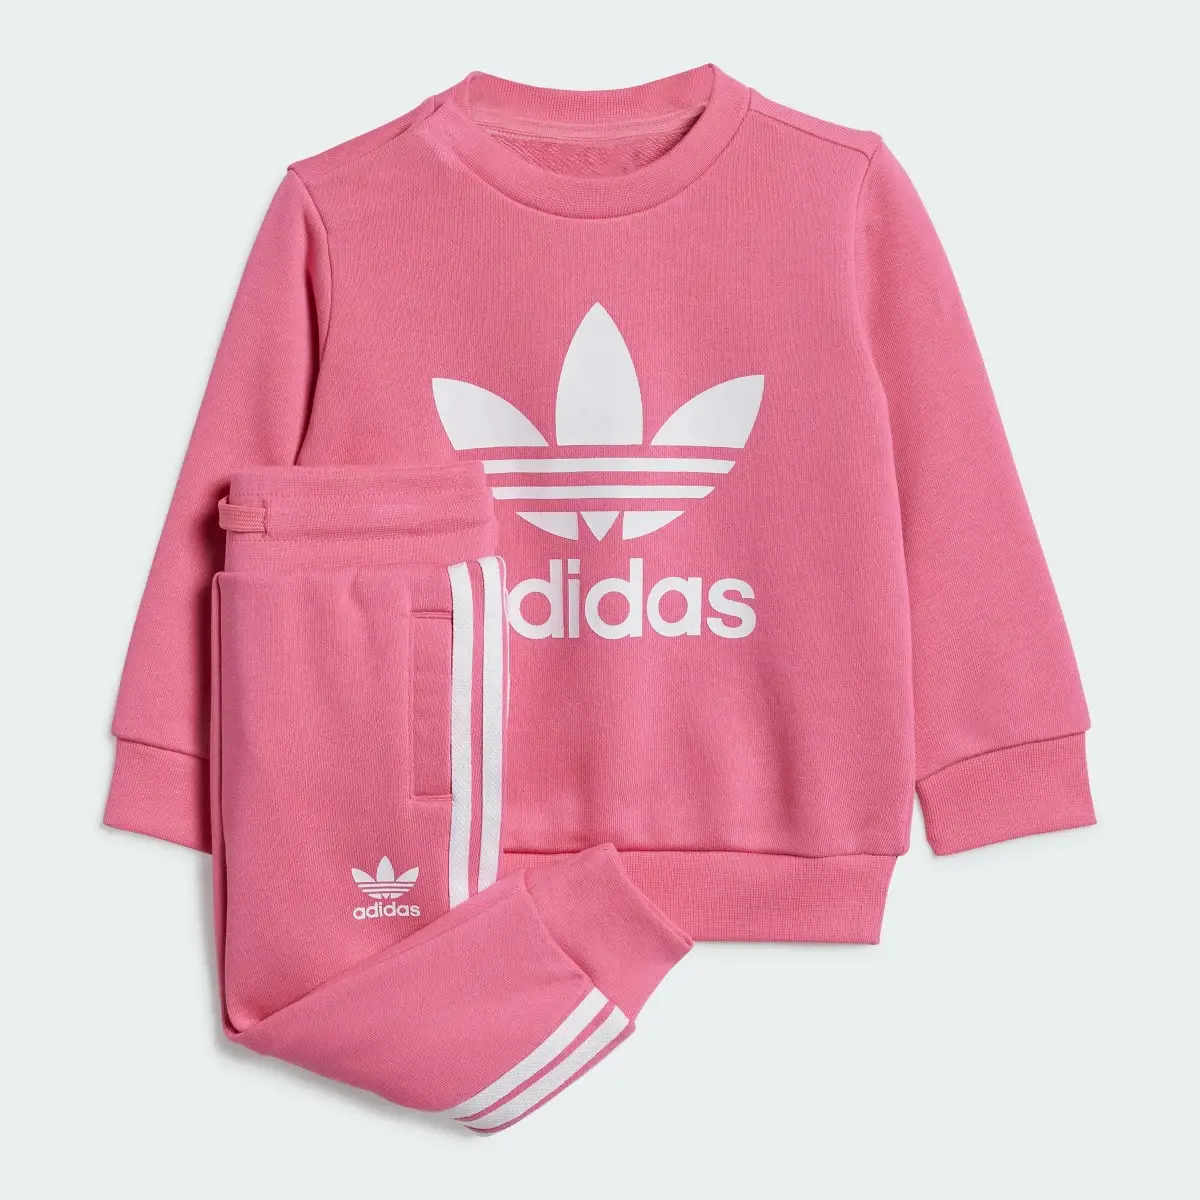 Adidas Tuta Crew Sweatshirt. 2